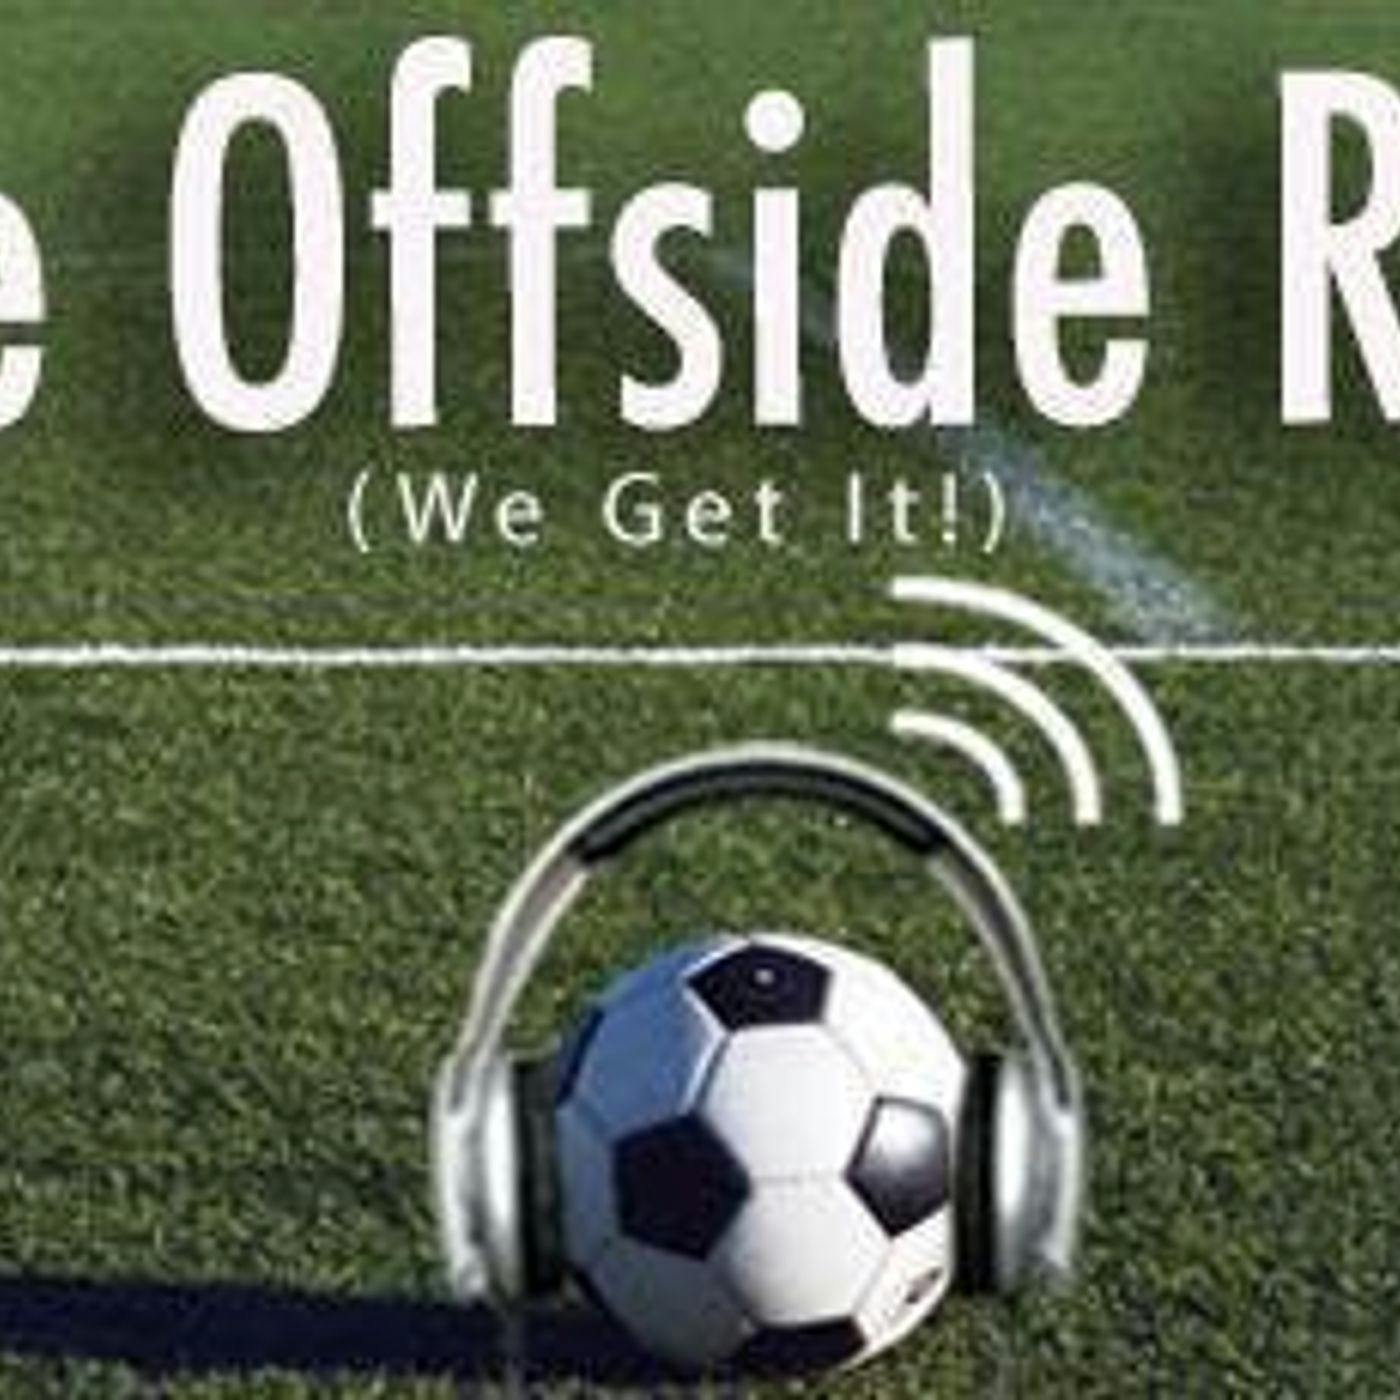 The Offside Rule 2013/14 Episode 39